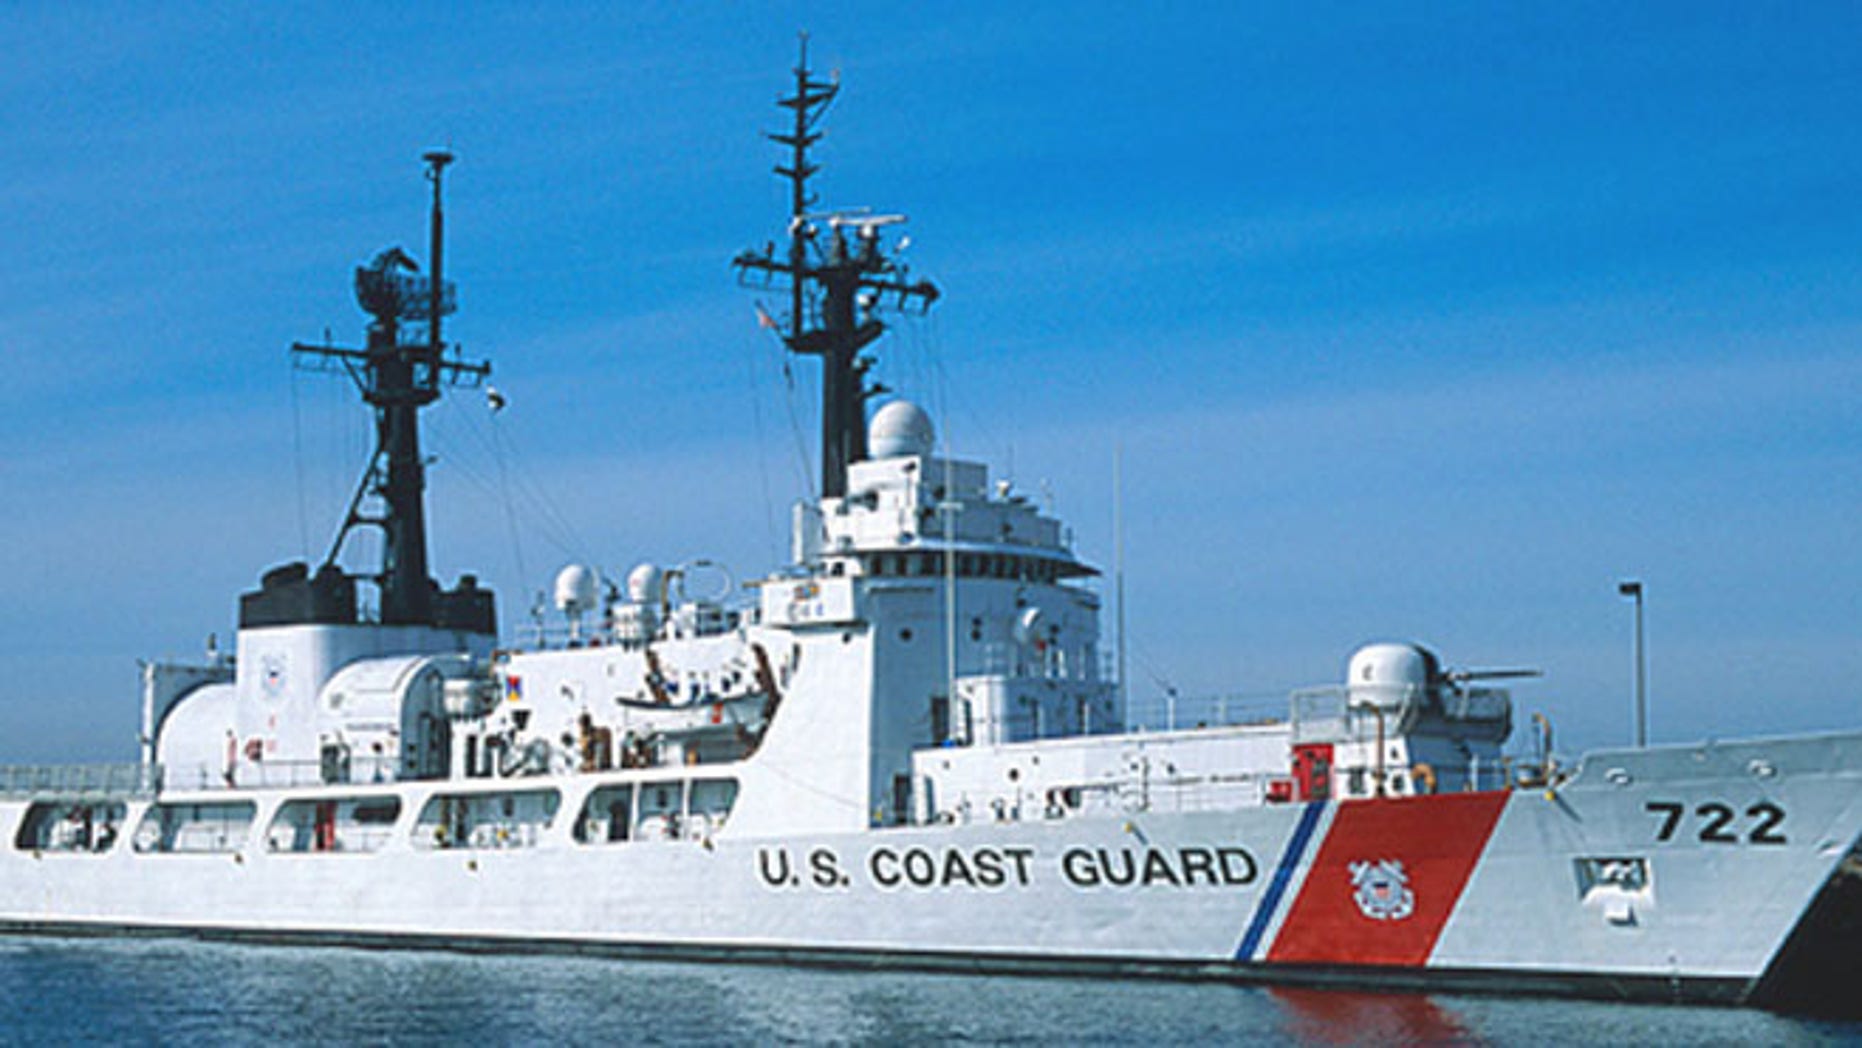 USCG Morgenthau cutter. (US Coast Guard)